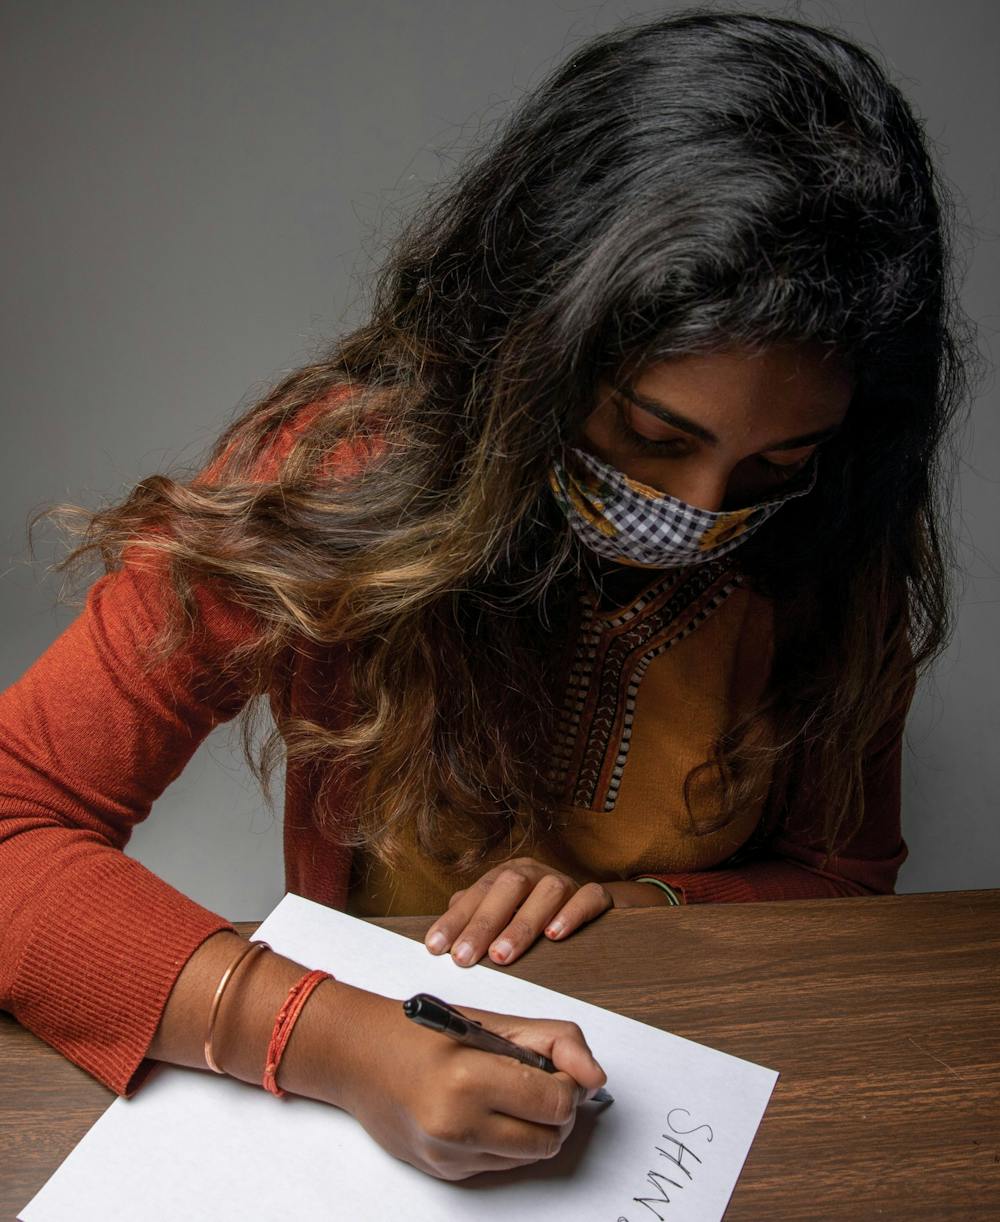 Shwetha Sundarrajan writes down misspellings of her name Nov. 3, 2020, in the photojournalism studio. Throughout Sundarrajan’s life, her name has been misspelled and misspoken. Jacob Musselman, DN Illustration